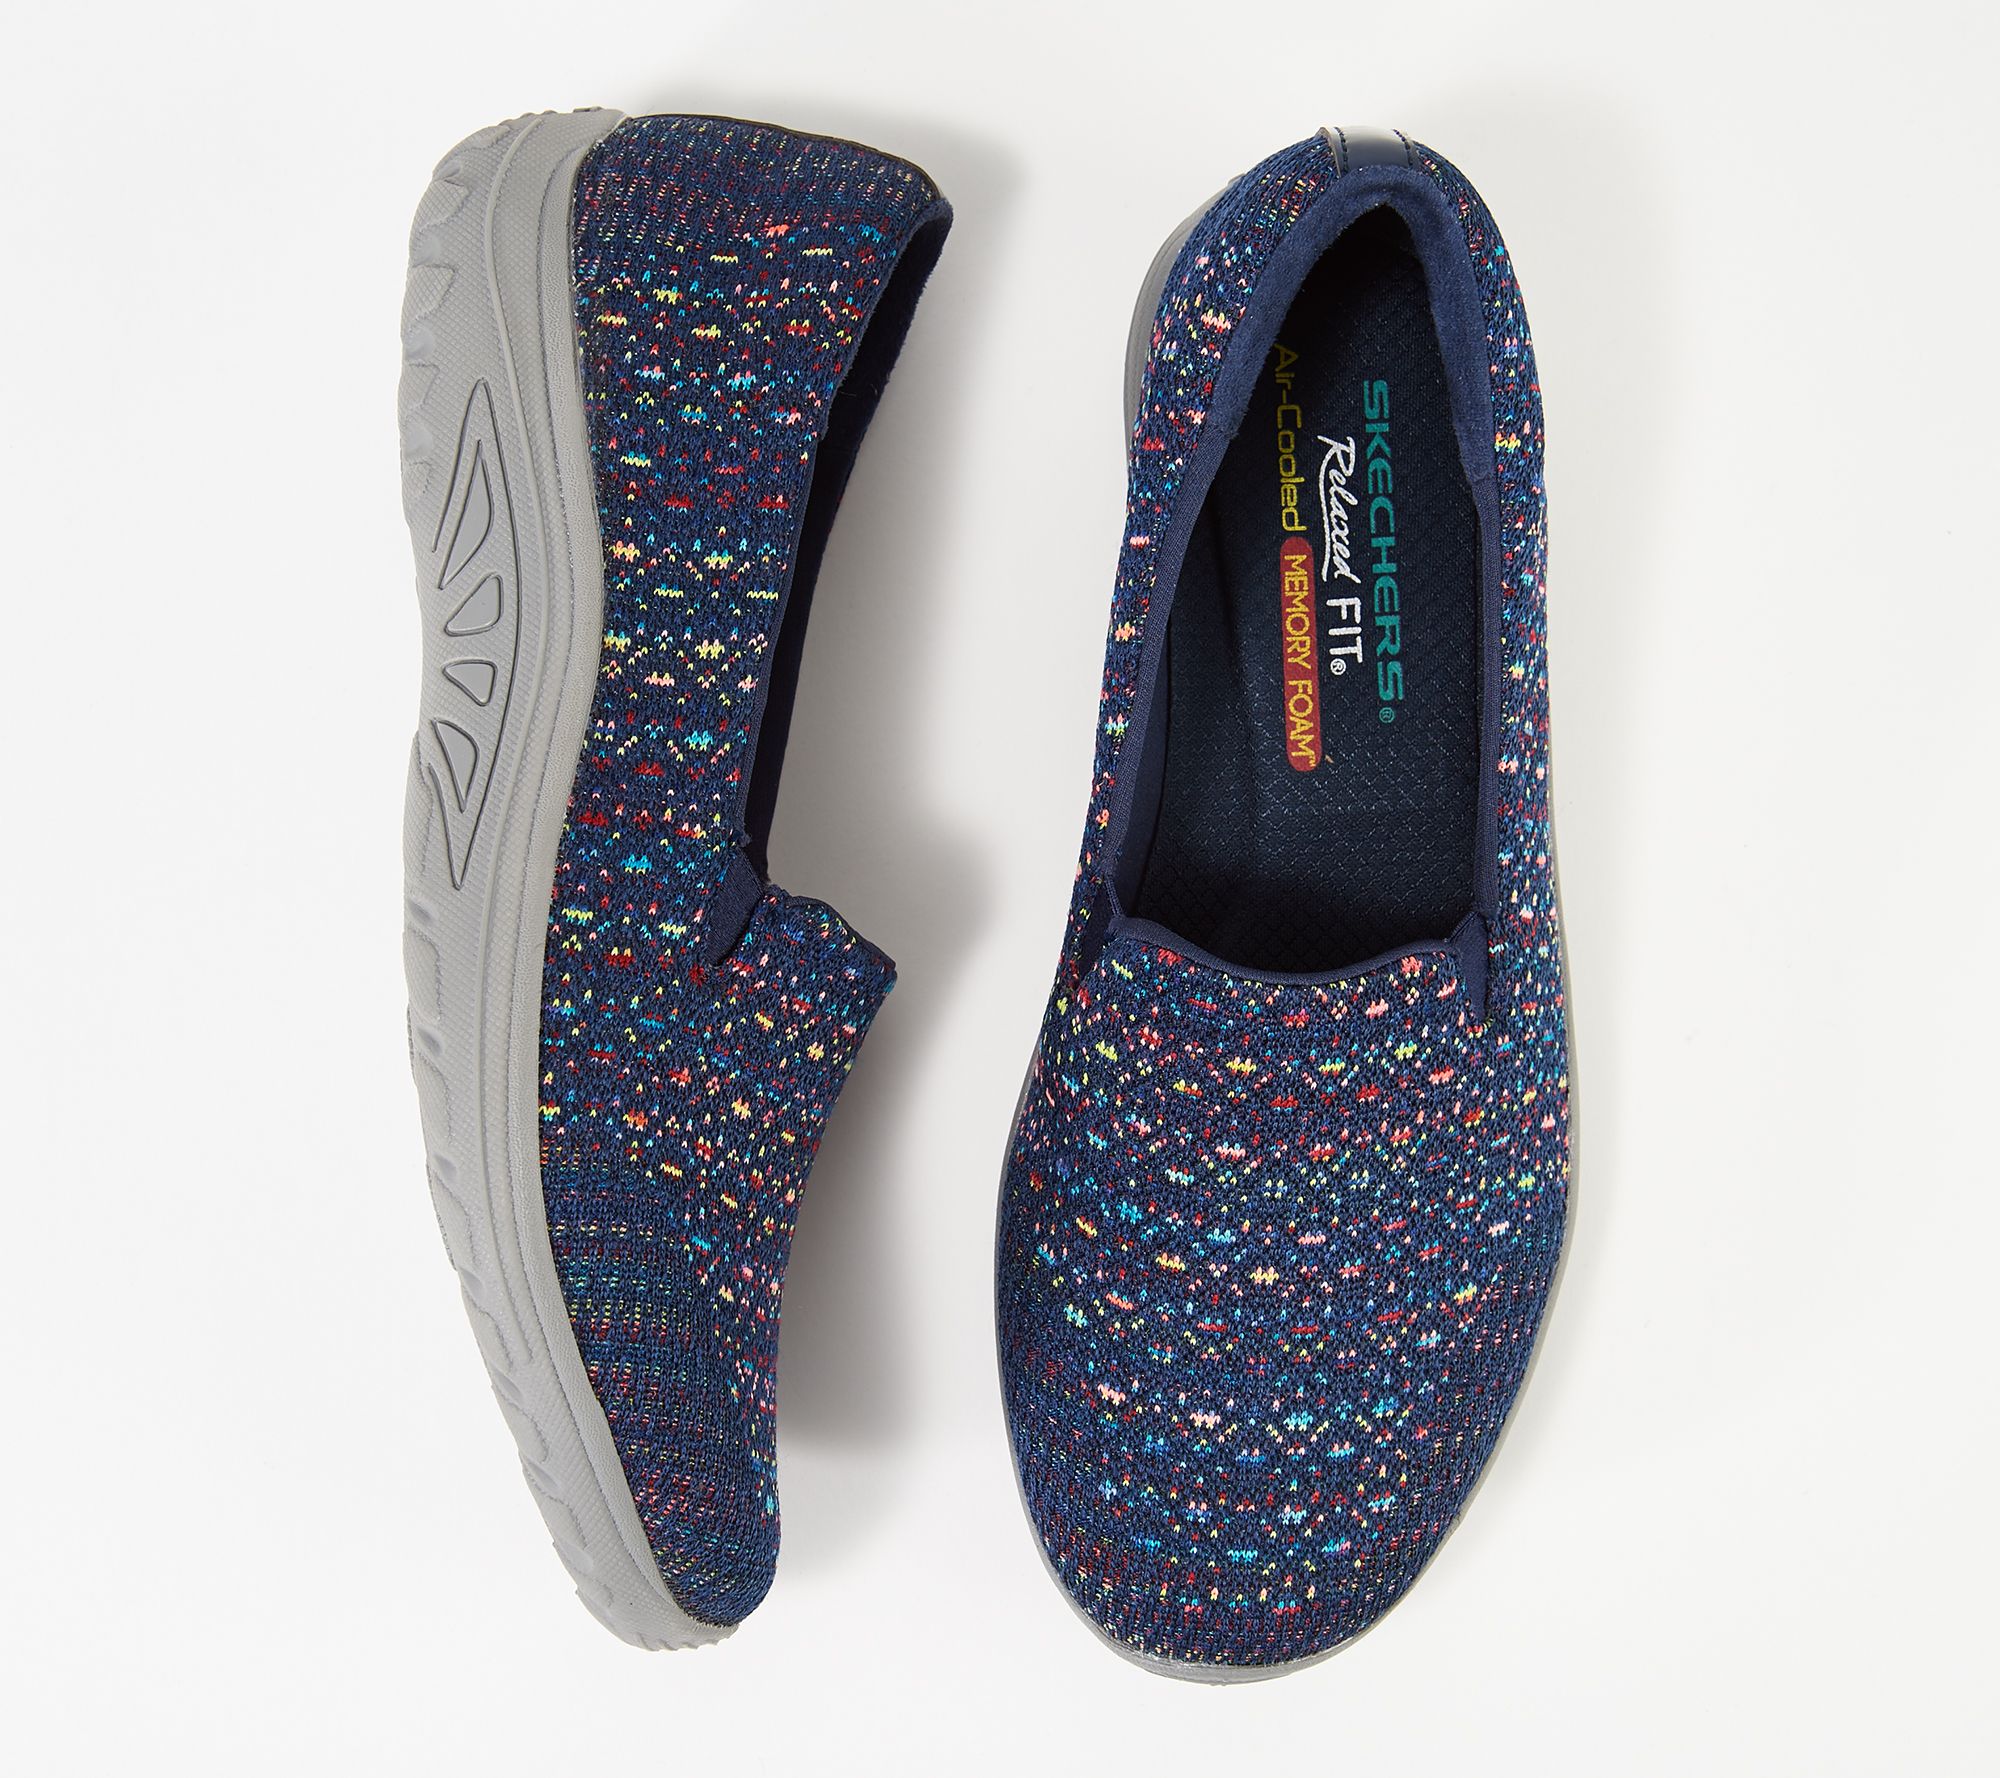 skechers knit slip on shoes